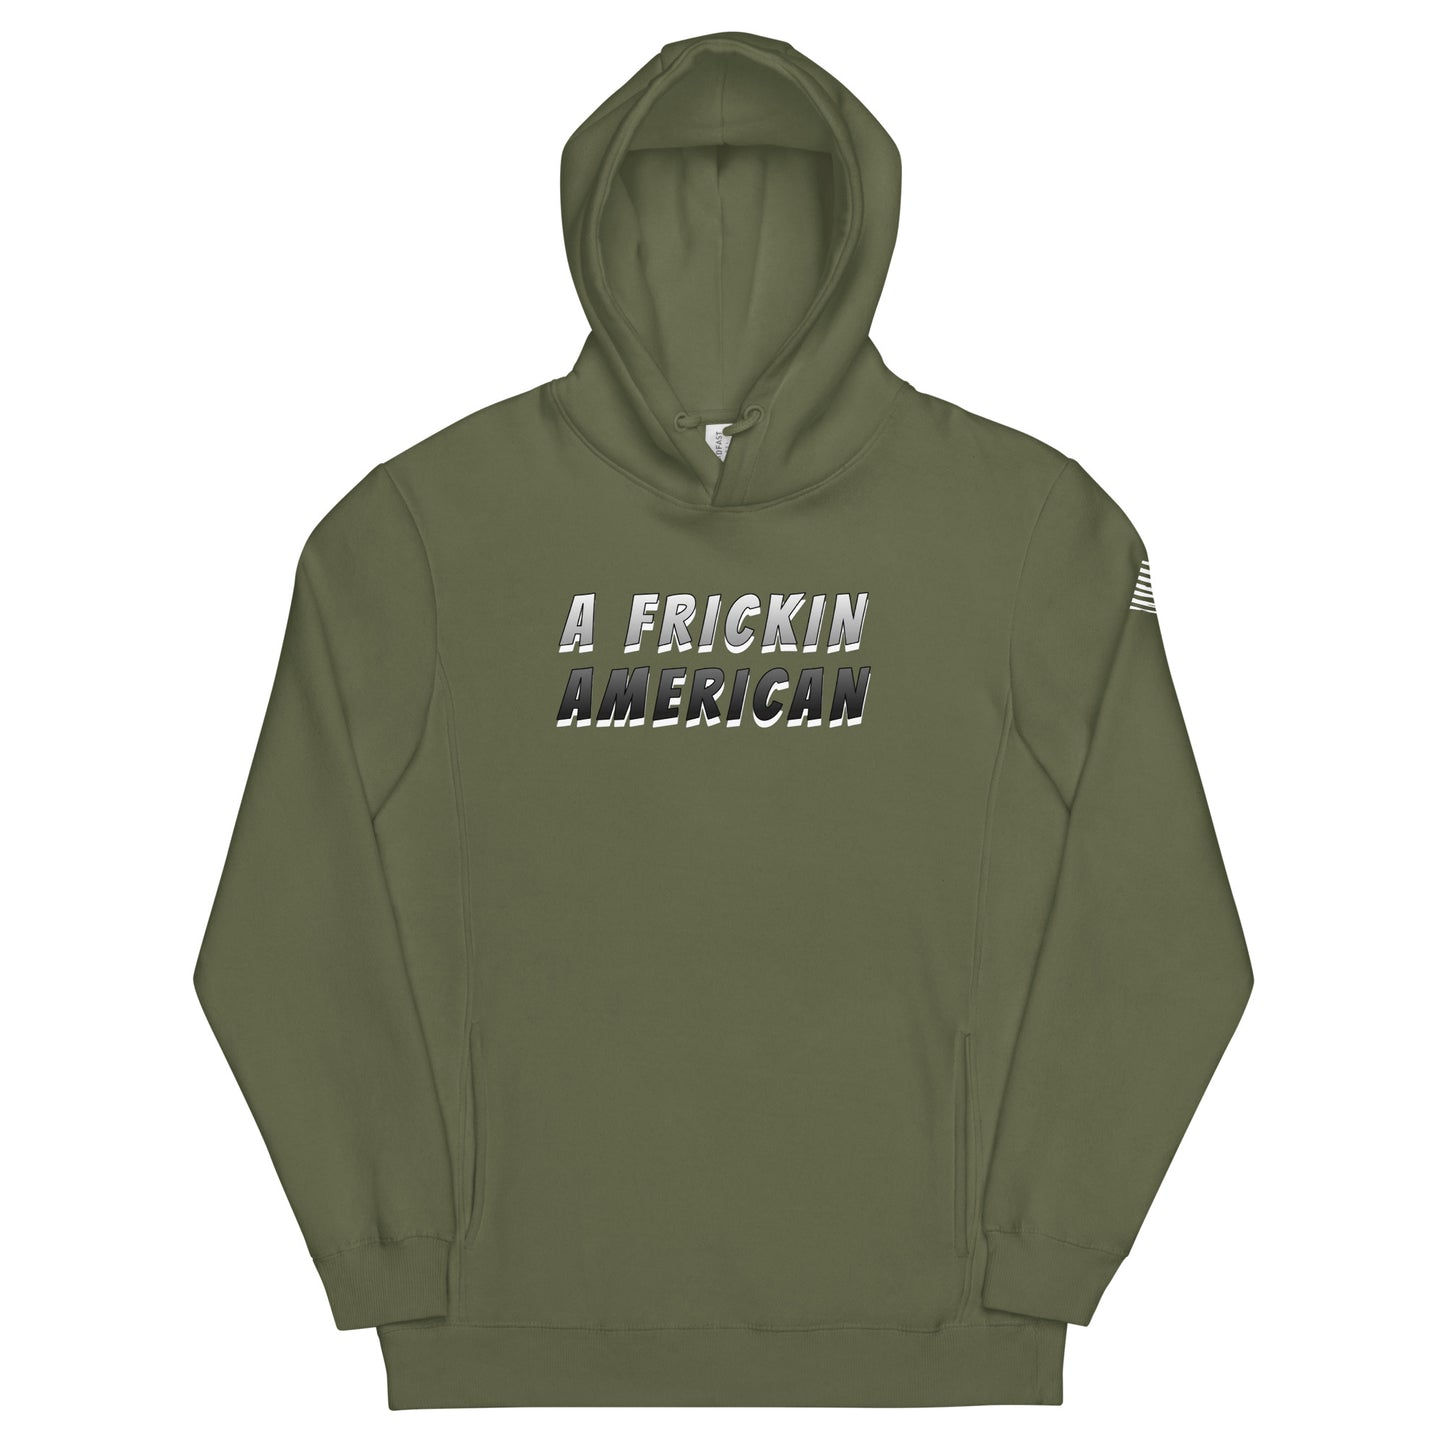 AFA Bold Unisex fashion hoodie